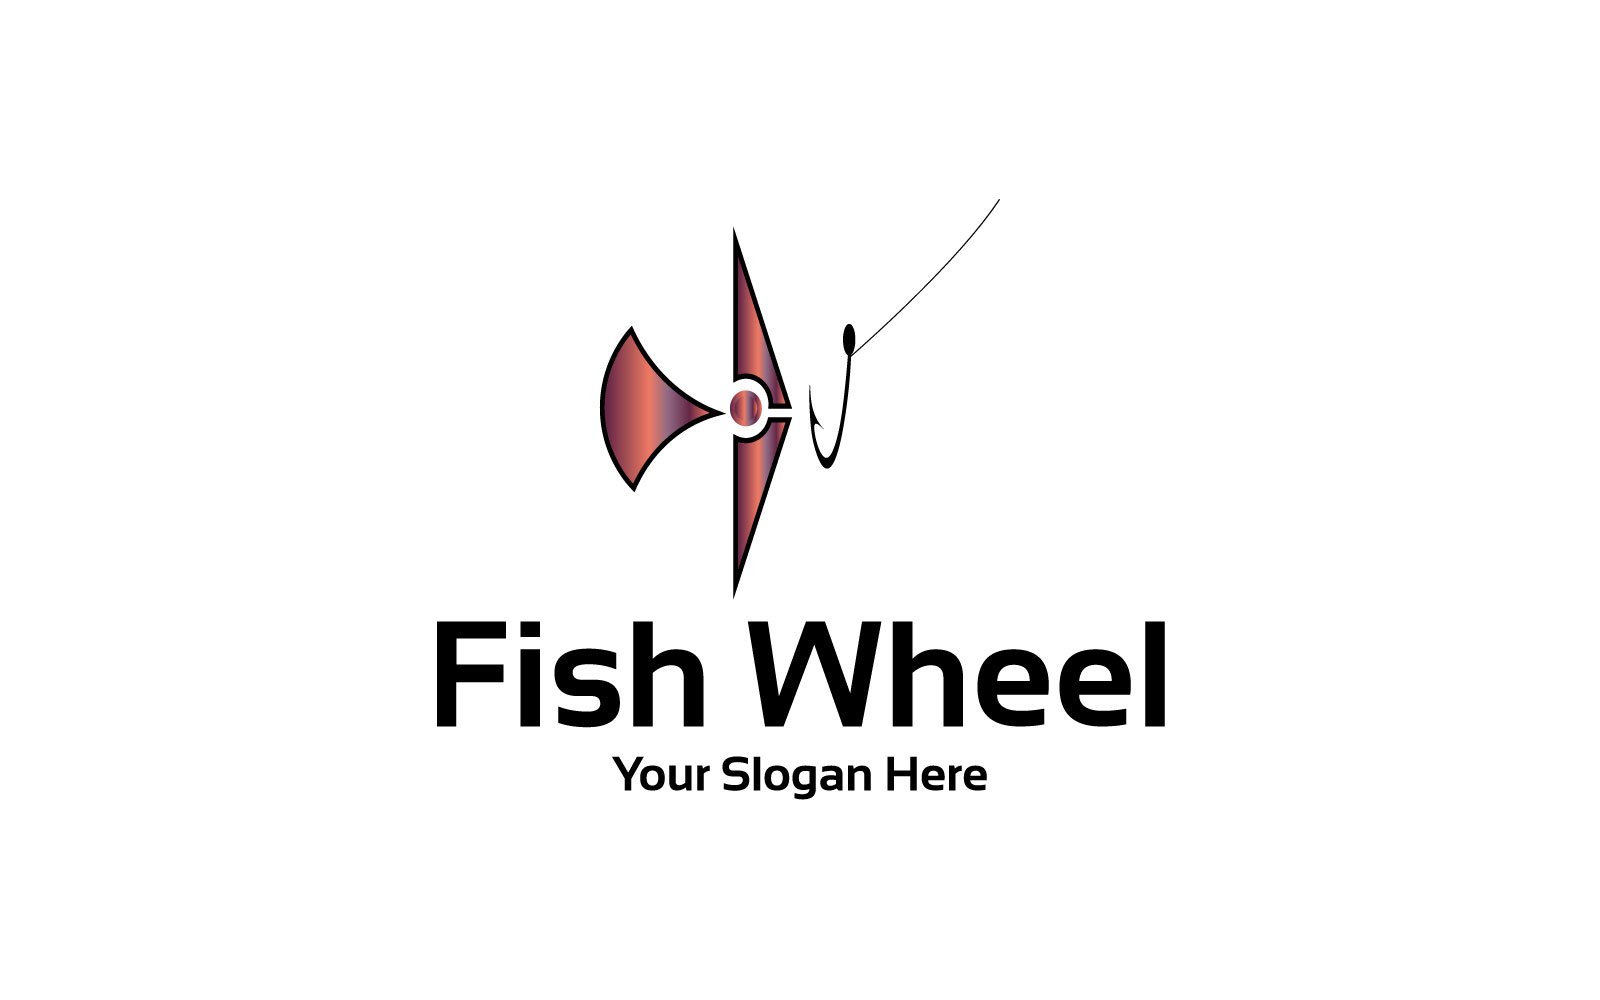 Sea Fish Wheel Logos Template